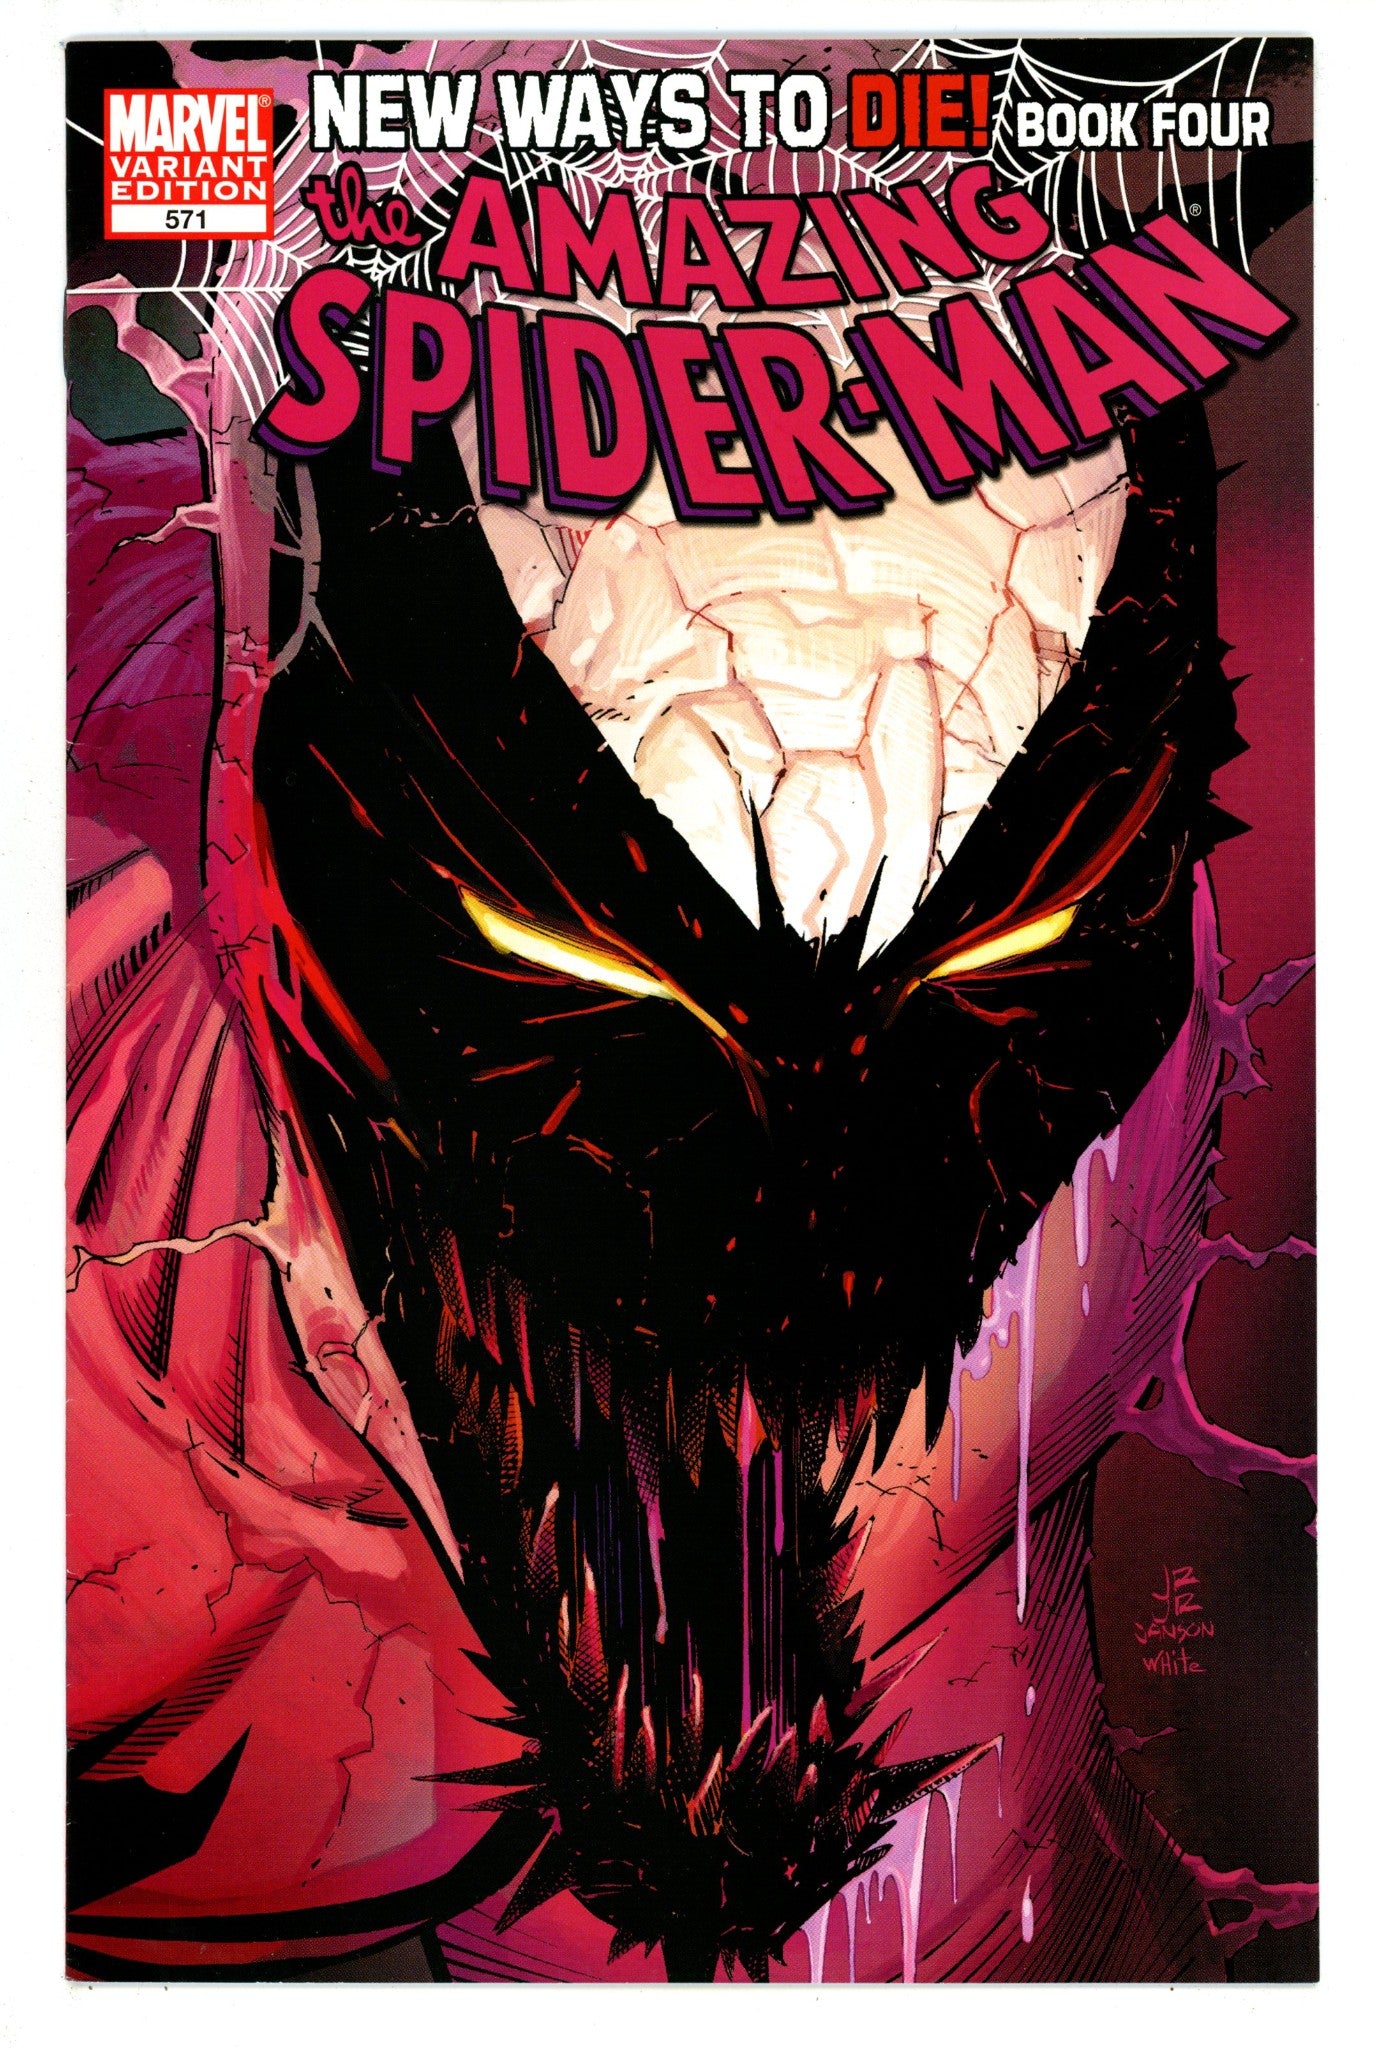 The Amazing Spider-Man Vol 2 571 VF (8.0) (2008) Jr. Variant 